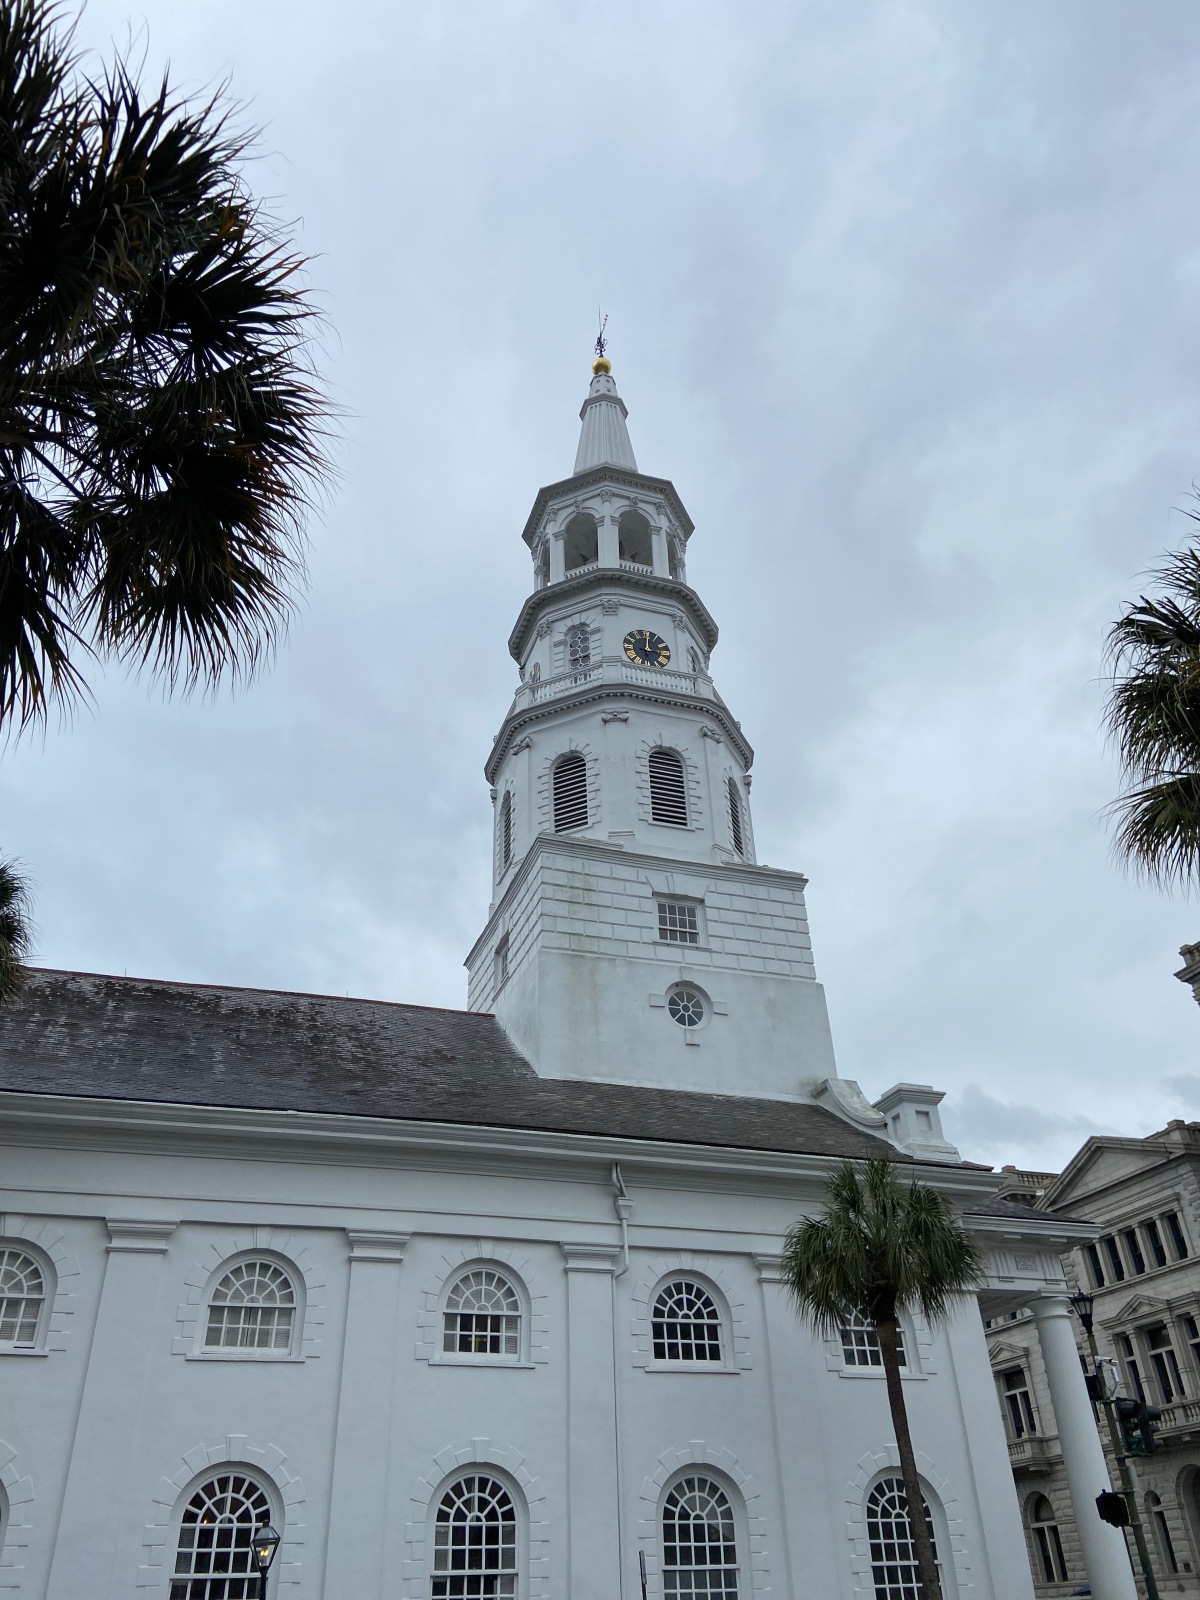 George Washington’s visit to St. Michael’s Church in Charleston